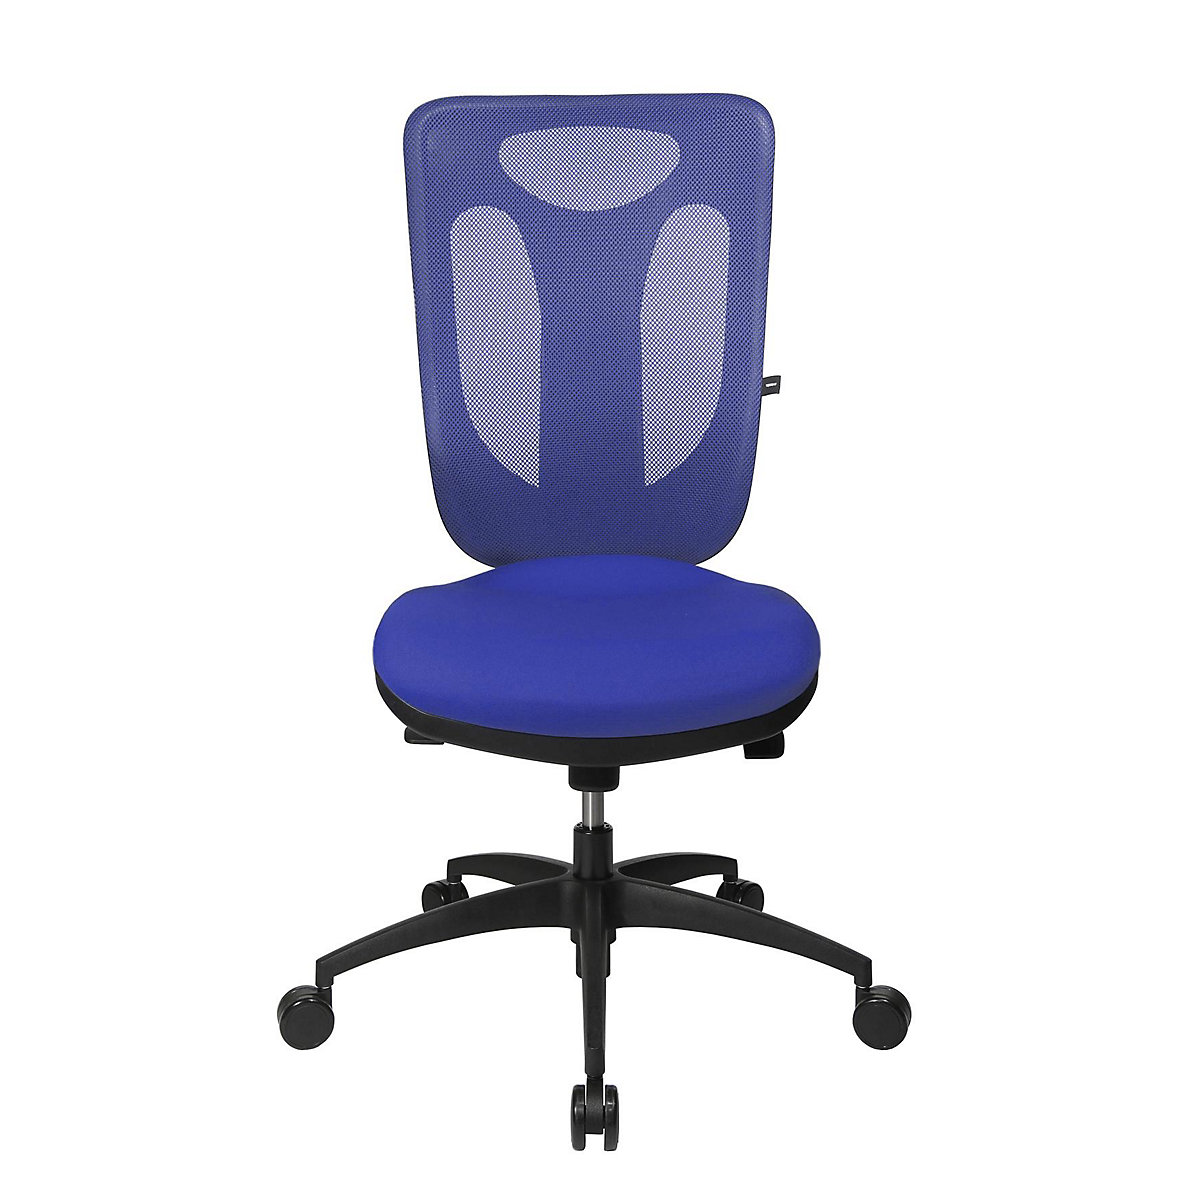 Ergonomic swivel chair, synchronous mechanism, ergonomic seat – Topstar